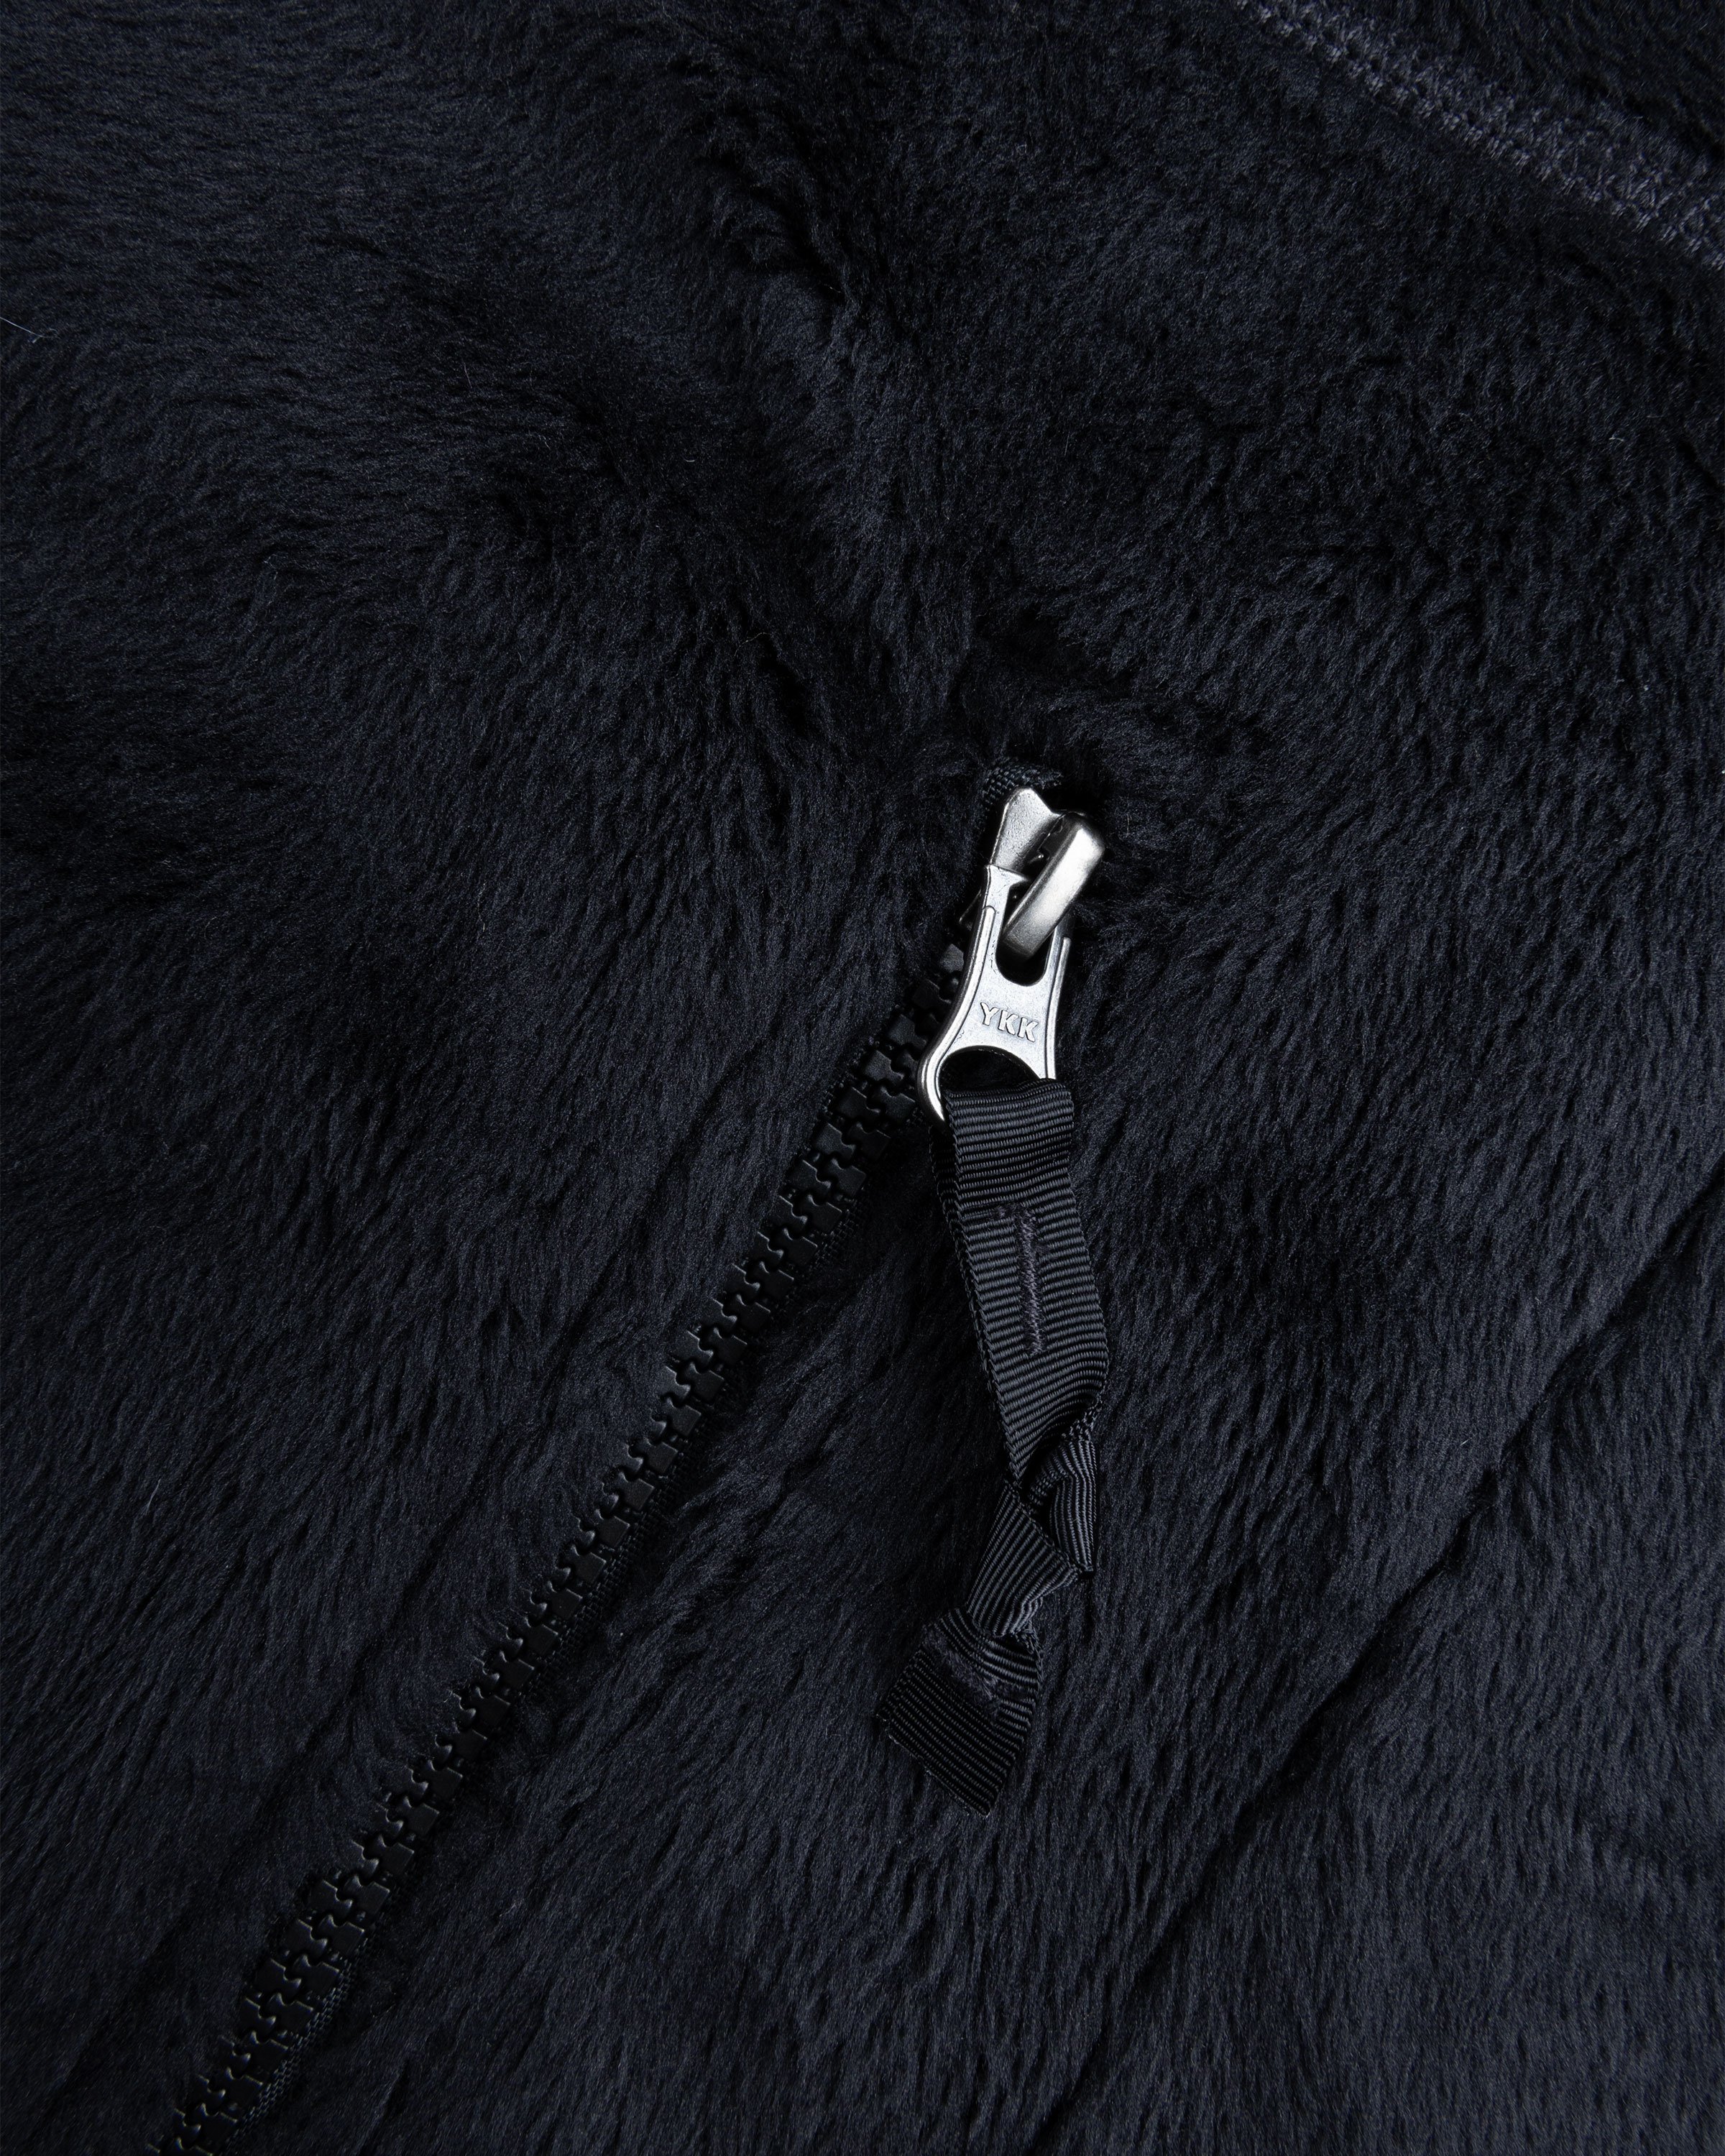 The North Face - Versa Velour Jacket Black - Clothing - Black - Image 7